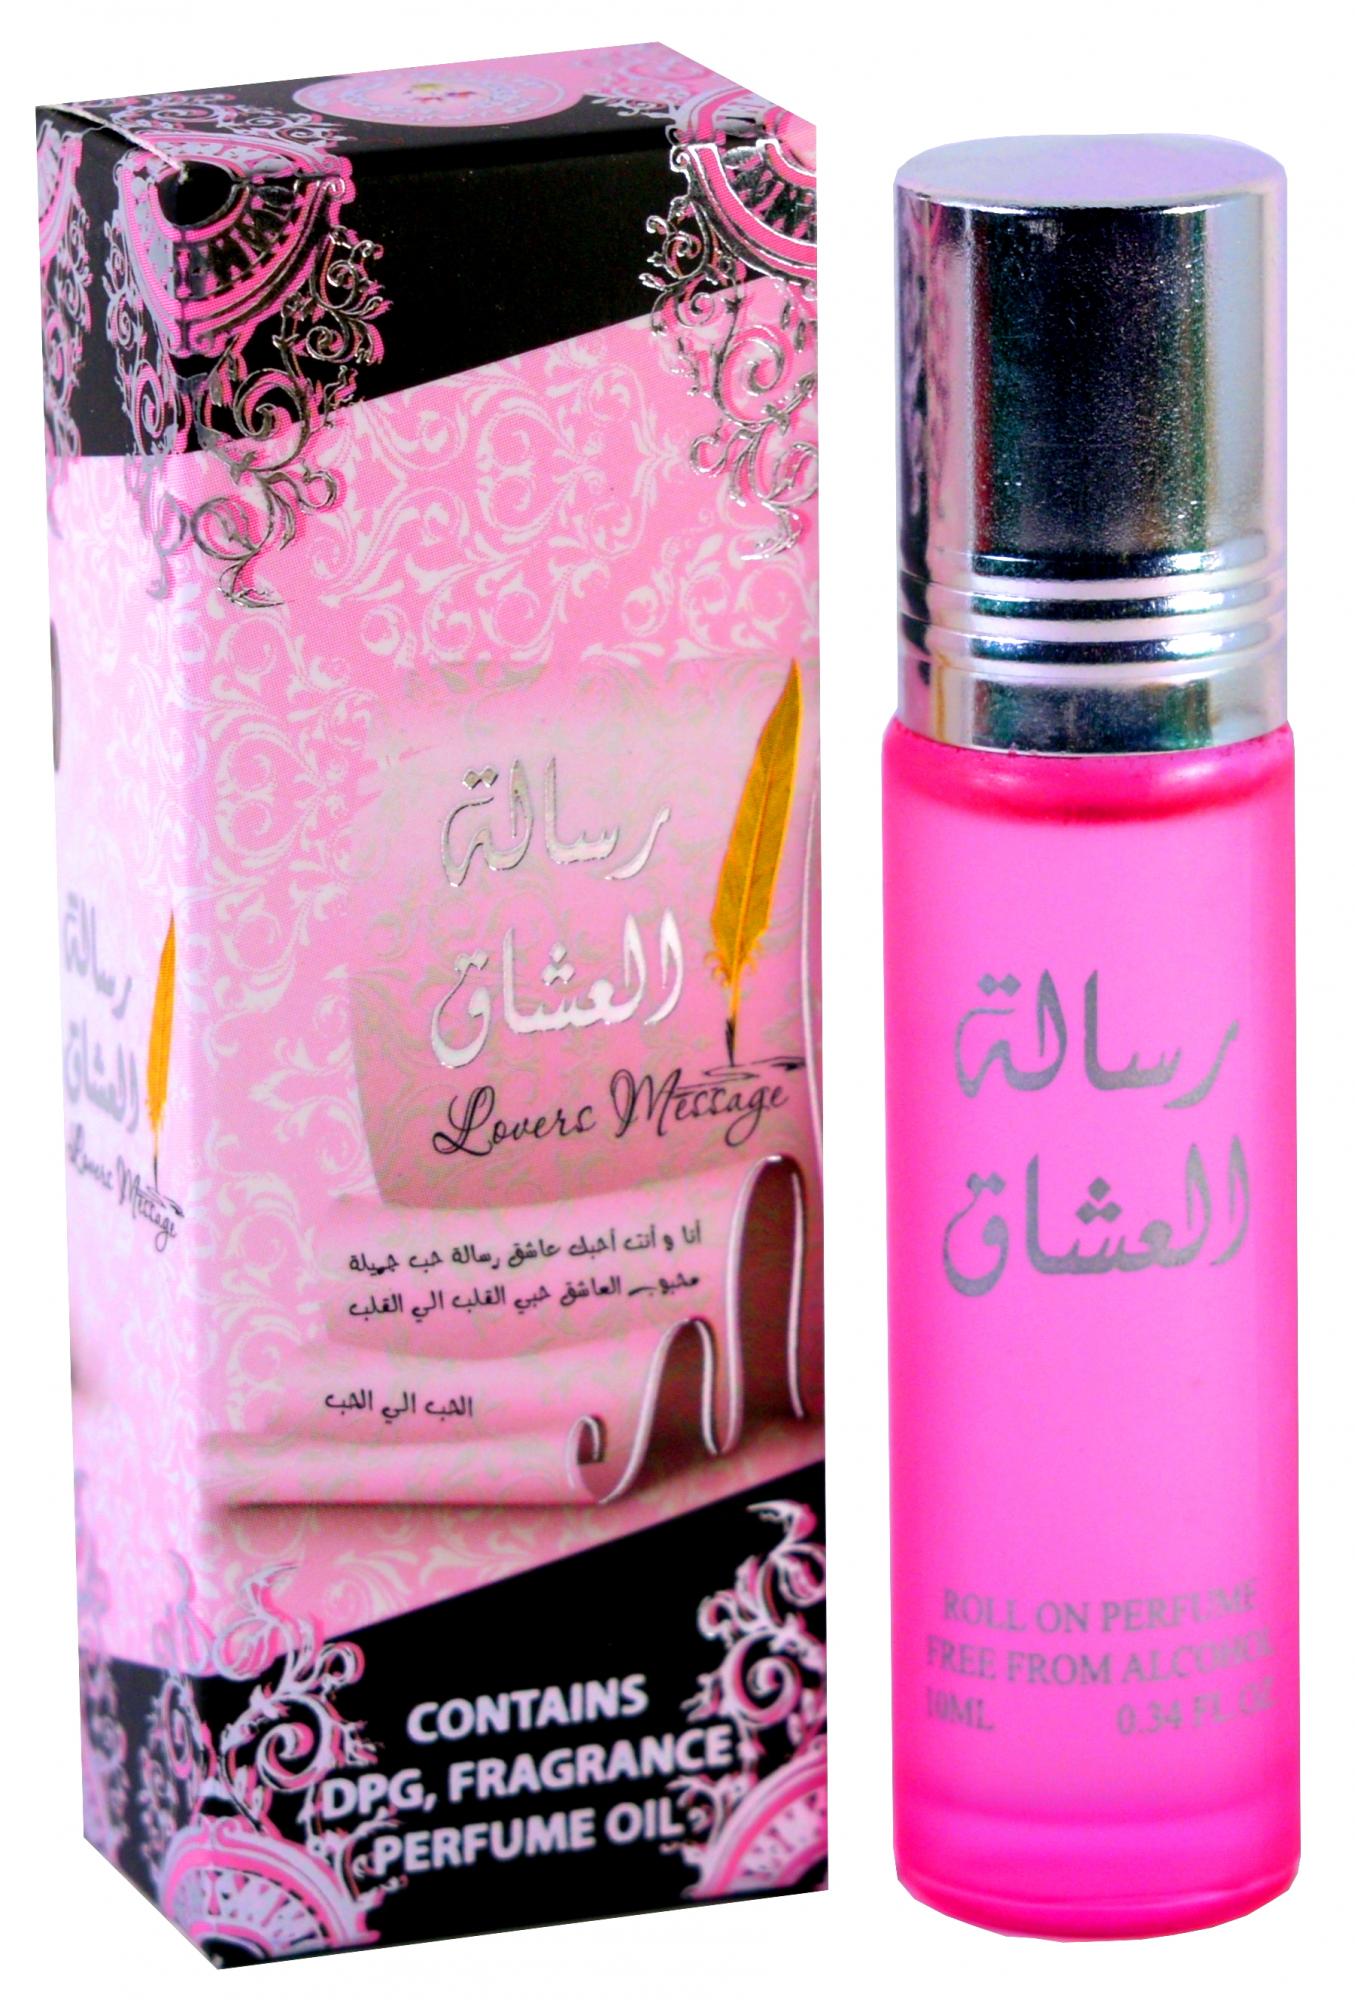 LOVERS MESSAGE Fragrance Perfume Oil, Ard Al Zaafaran Trading (Арабские масляные духи ЛЮБОВНОЕ ПОСЛАНИЕ, Ард Аль Заафаран), 10 мл.